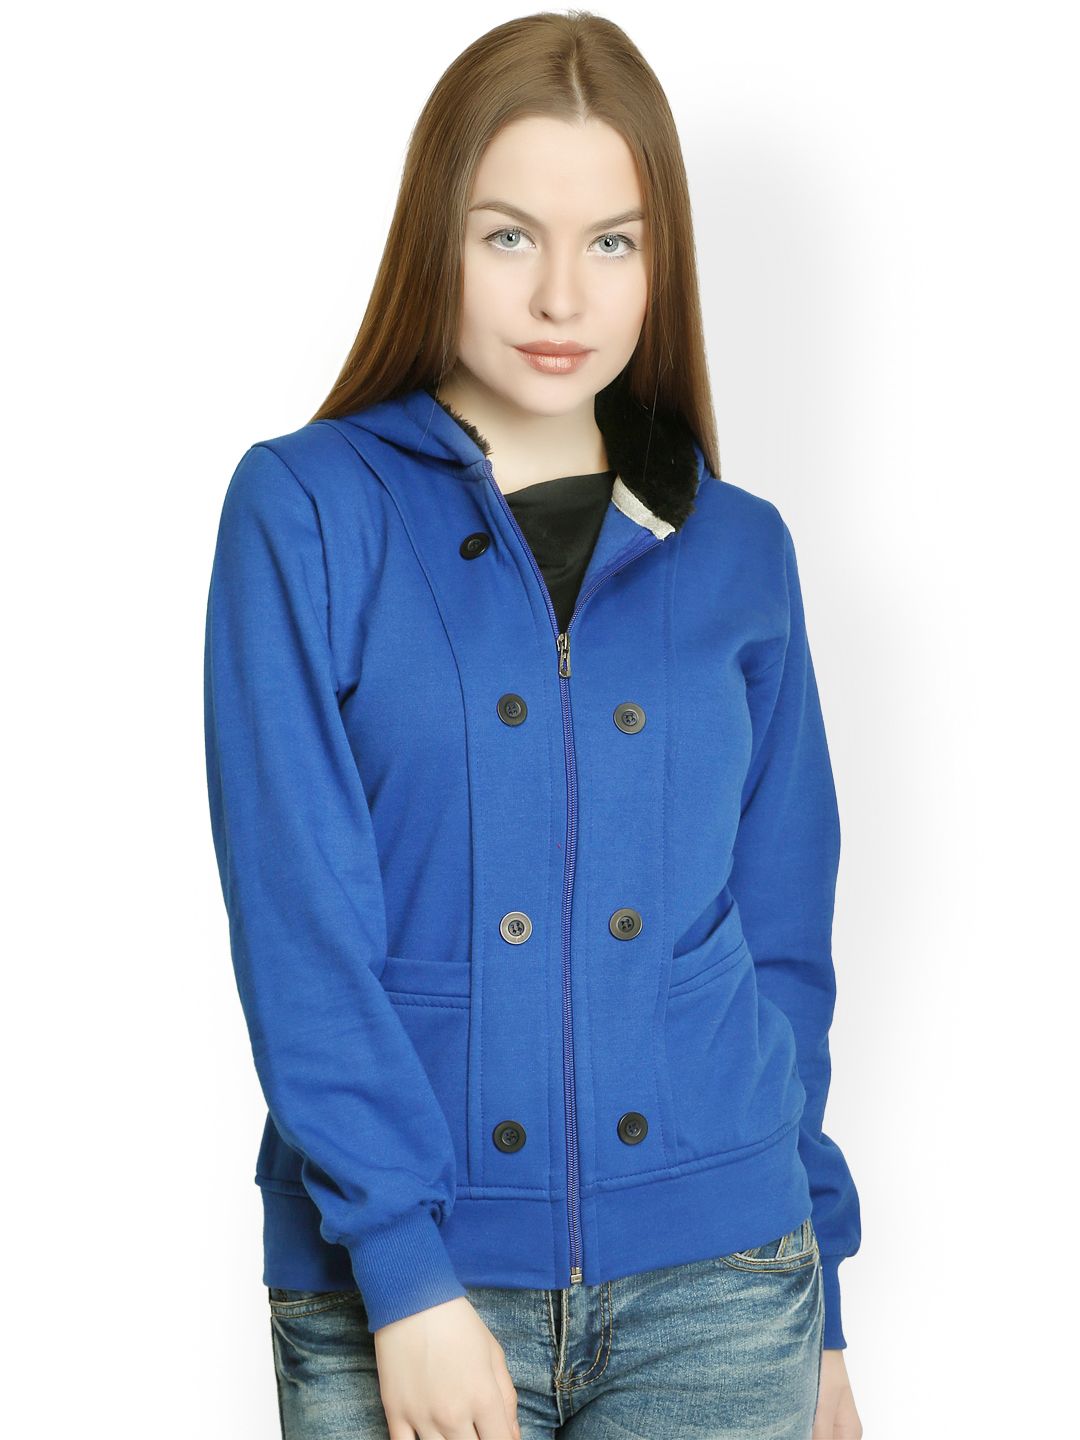 Belle Fille Women Royal Blue Hooded Sweatshirt Price in India